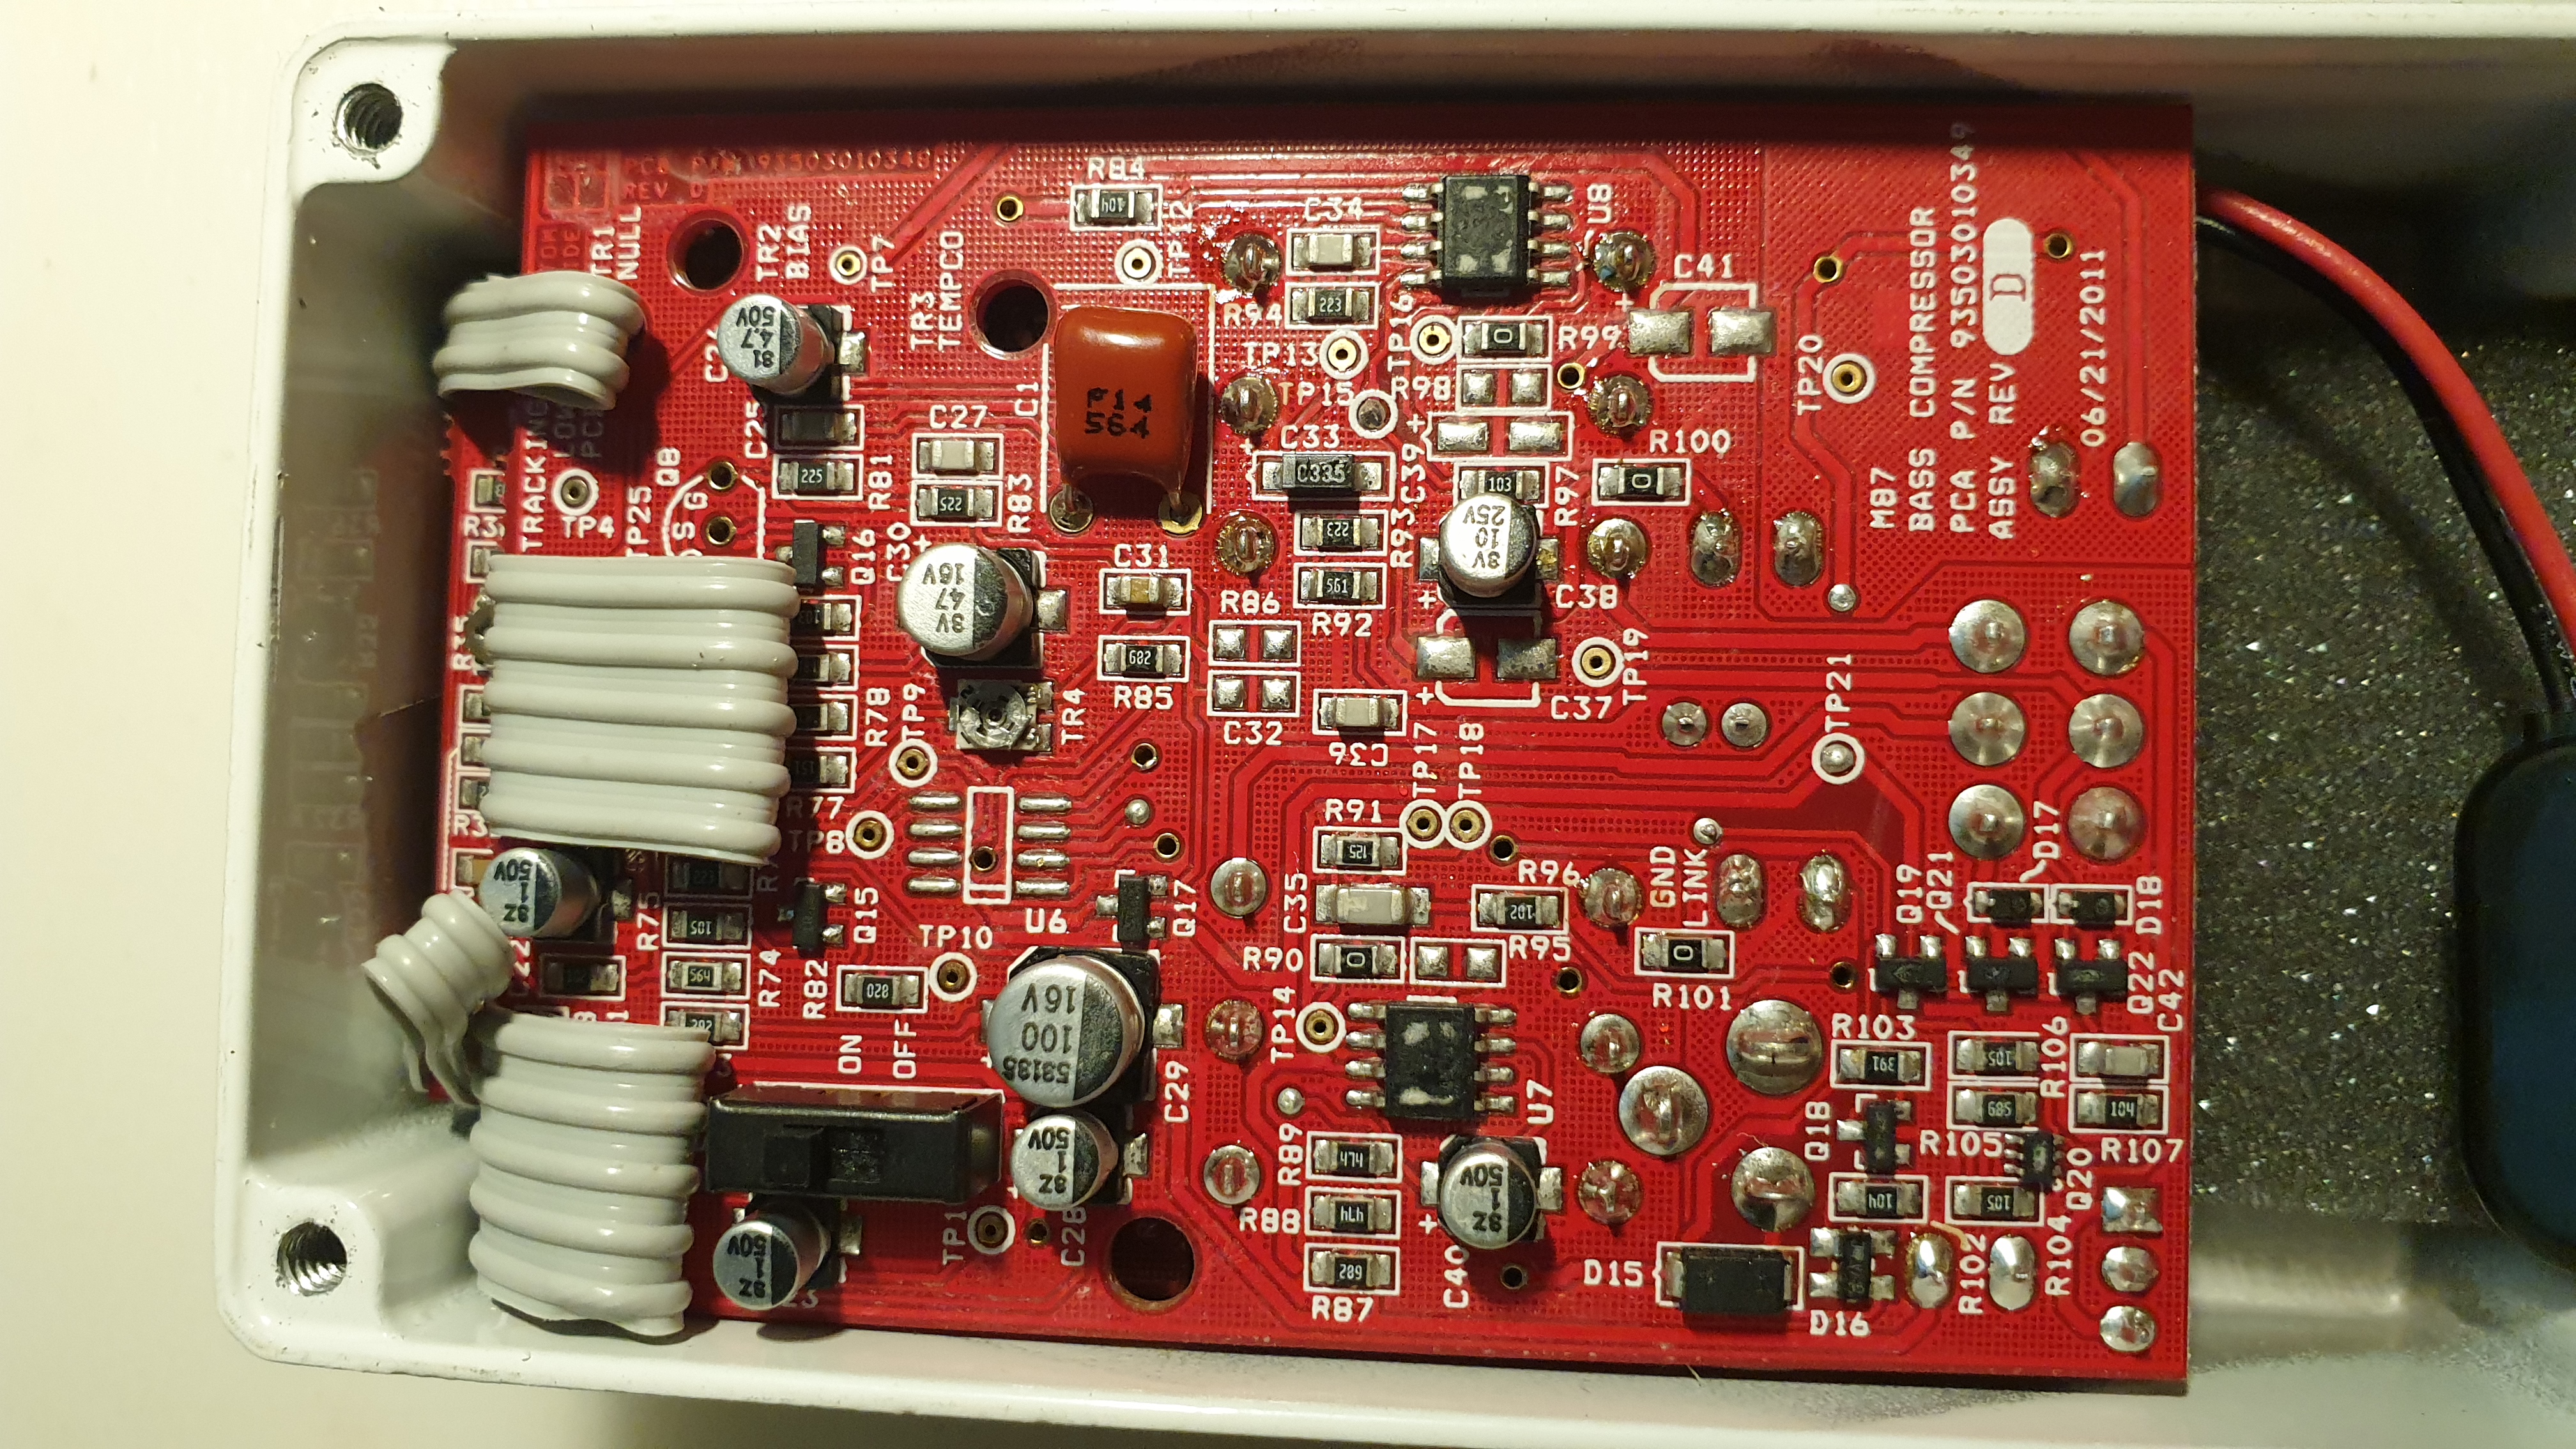 MXR Bass Compressor (M87) guts - 1176 pedal clone | GroupDIY Audio